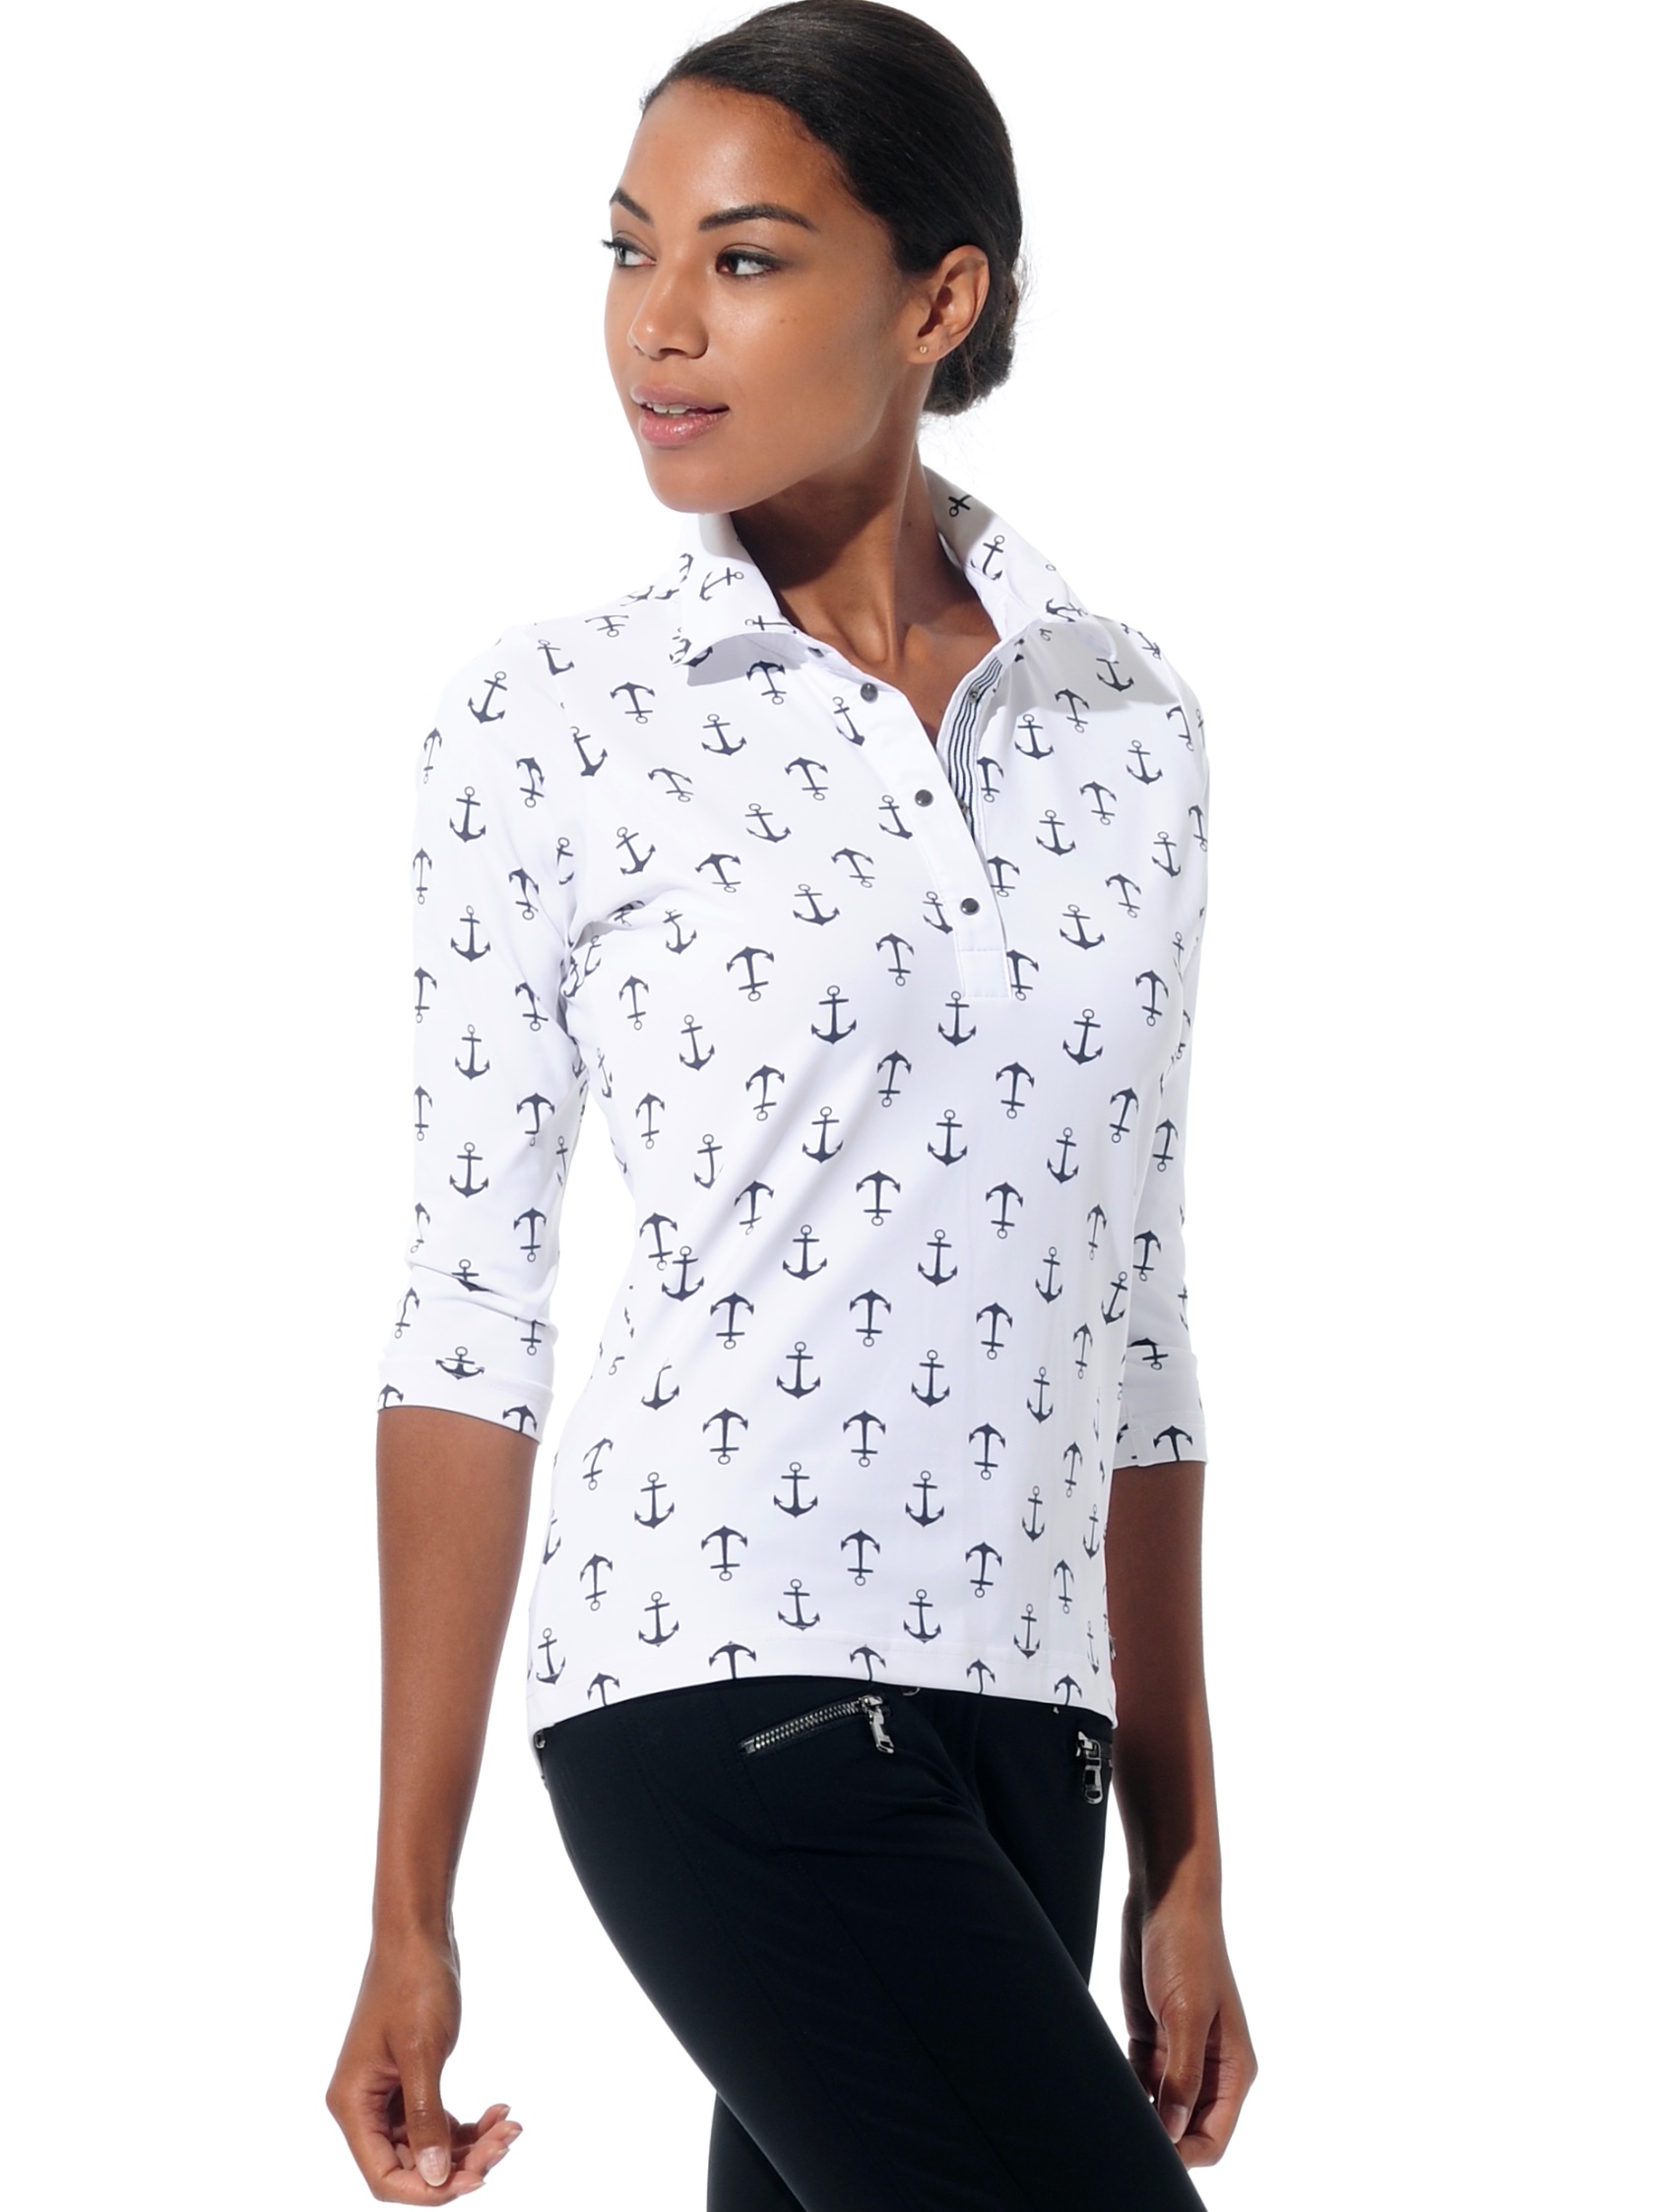 Anchor print polo shirt white/black 